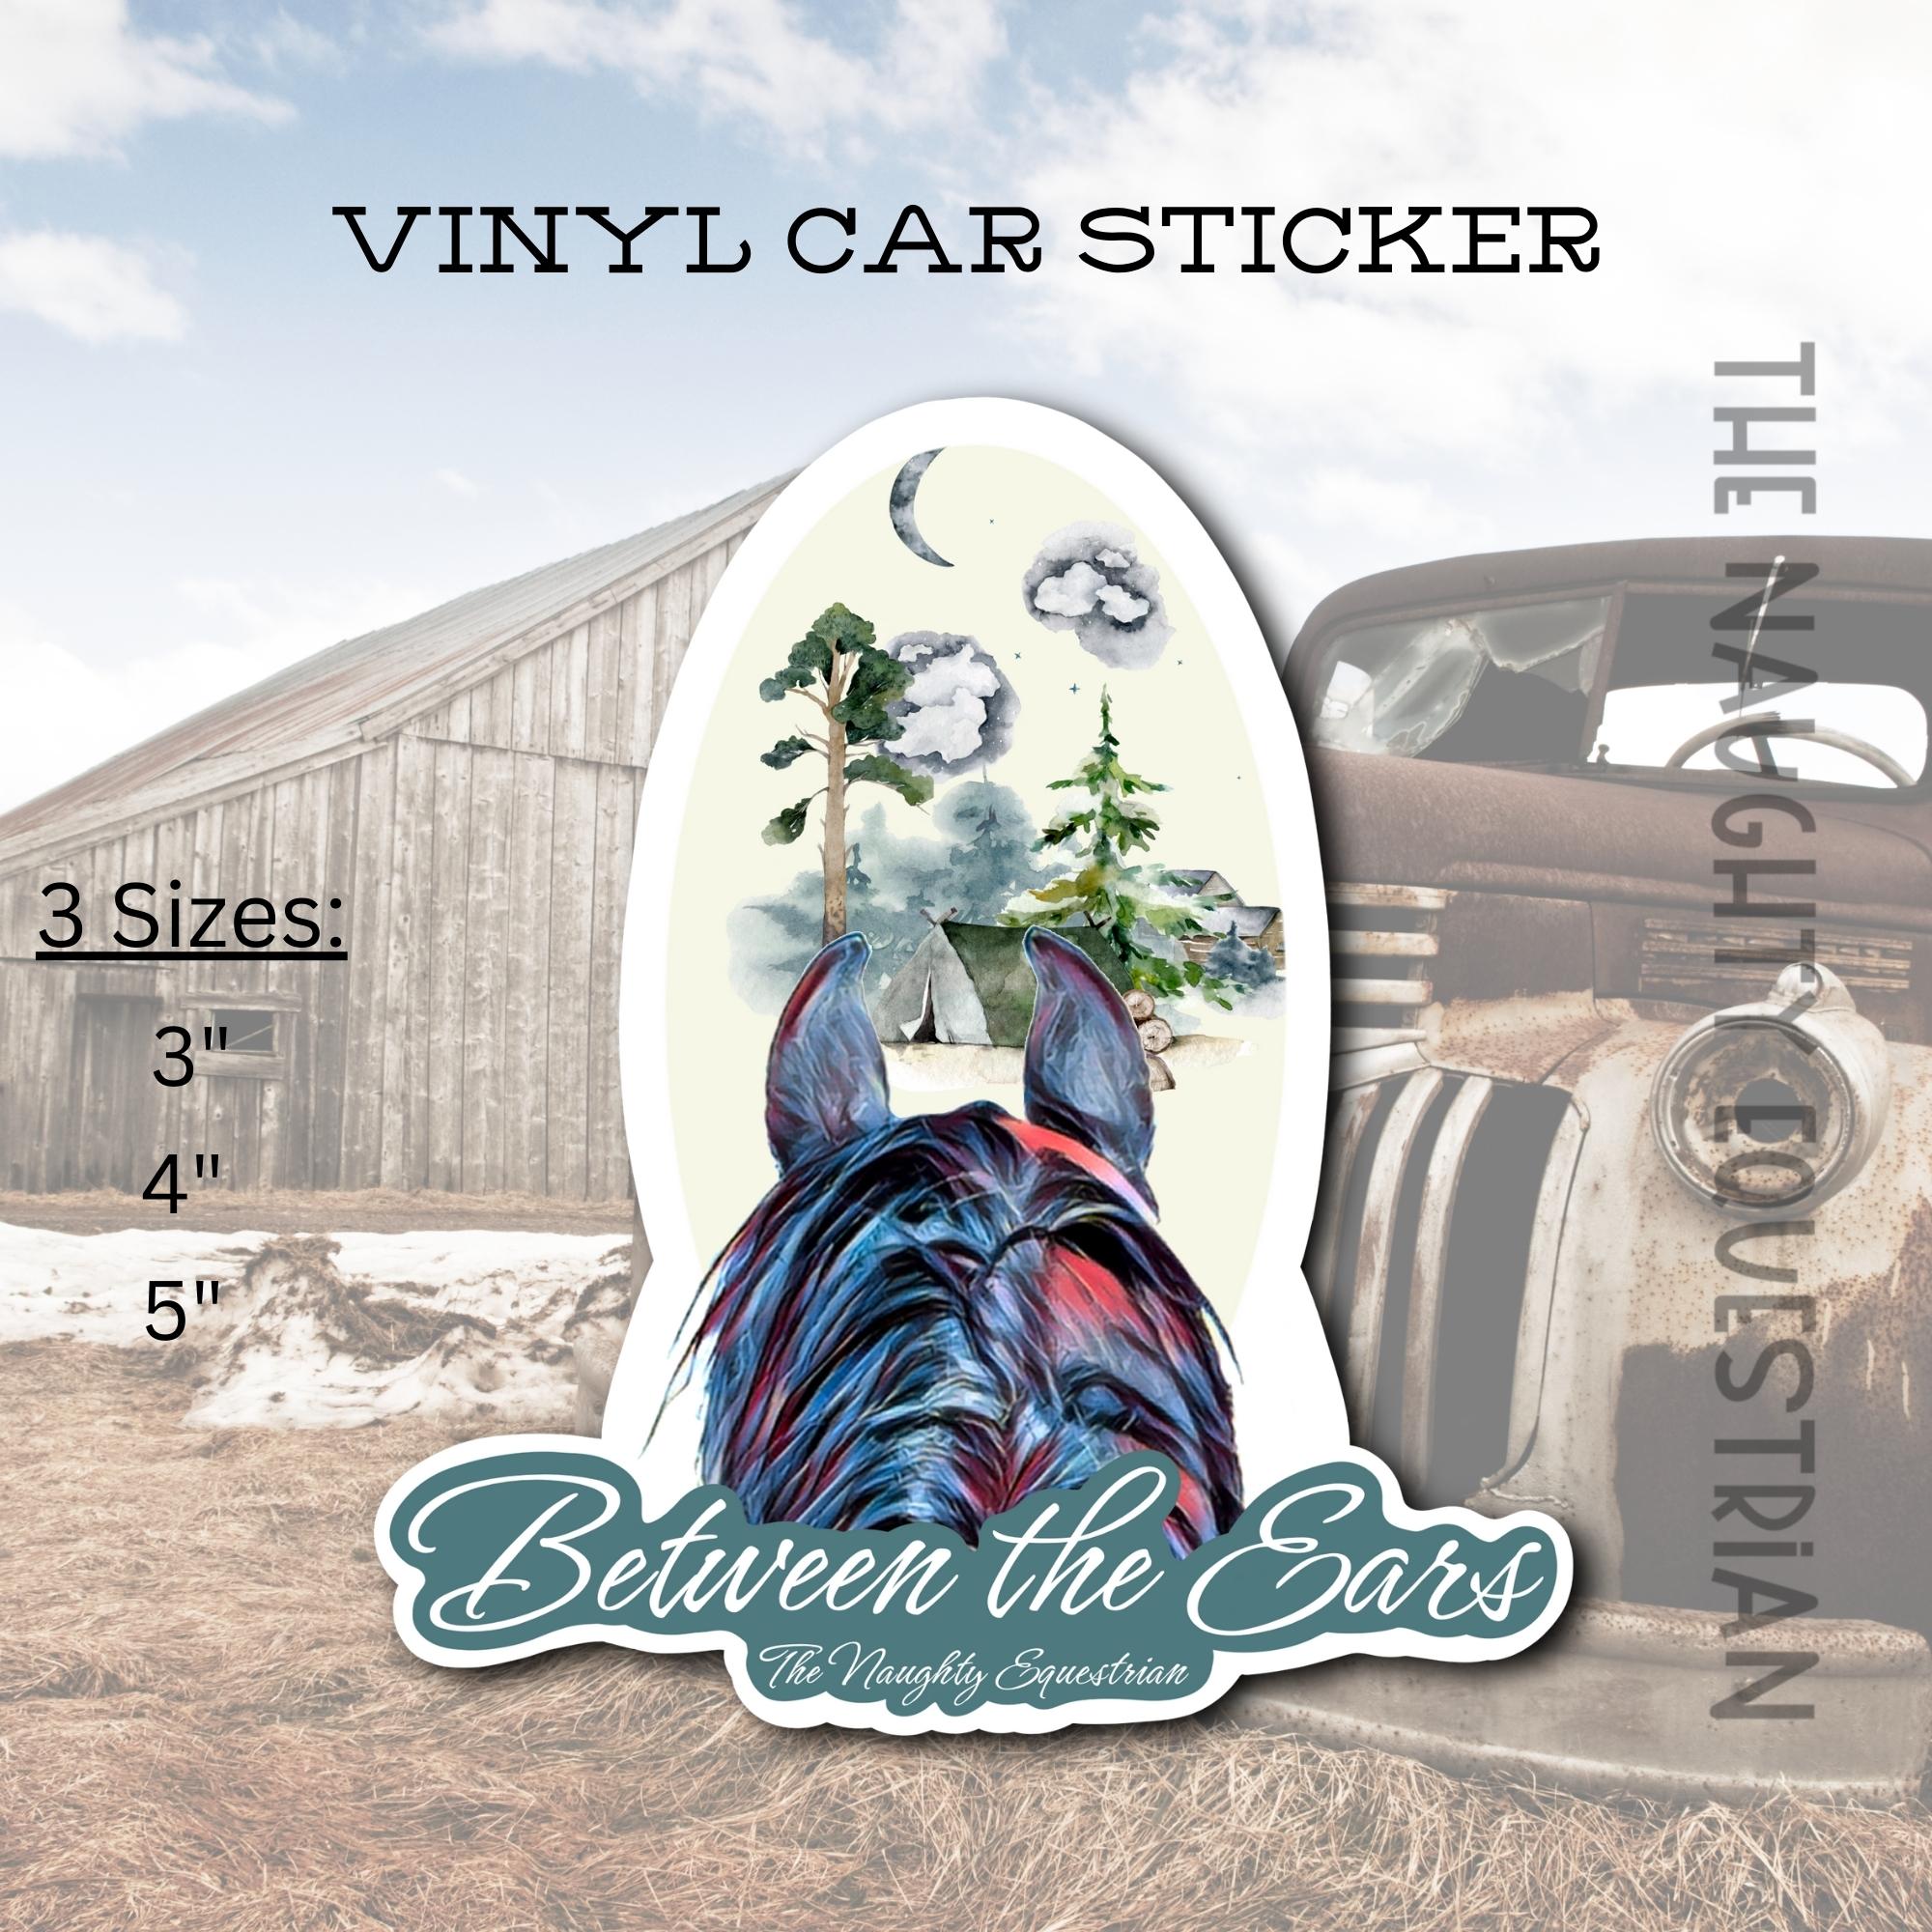 Camping Between the Ears Series Sticker, Vinyl Car Decal